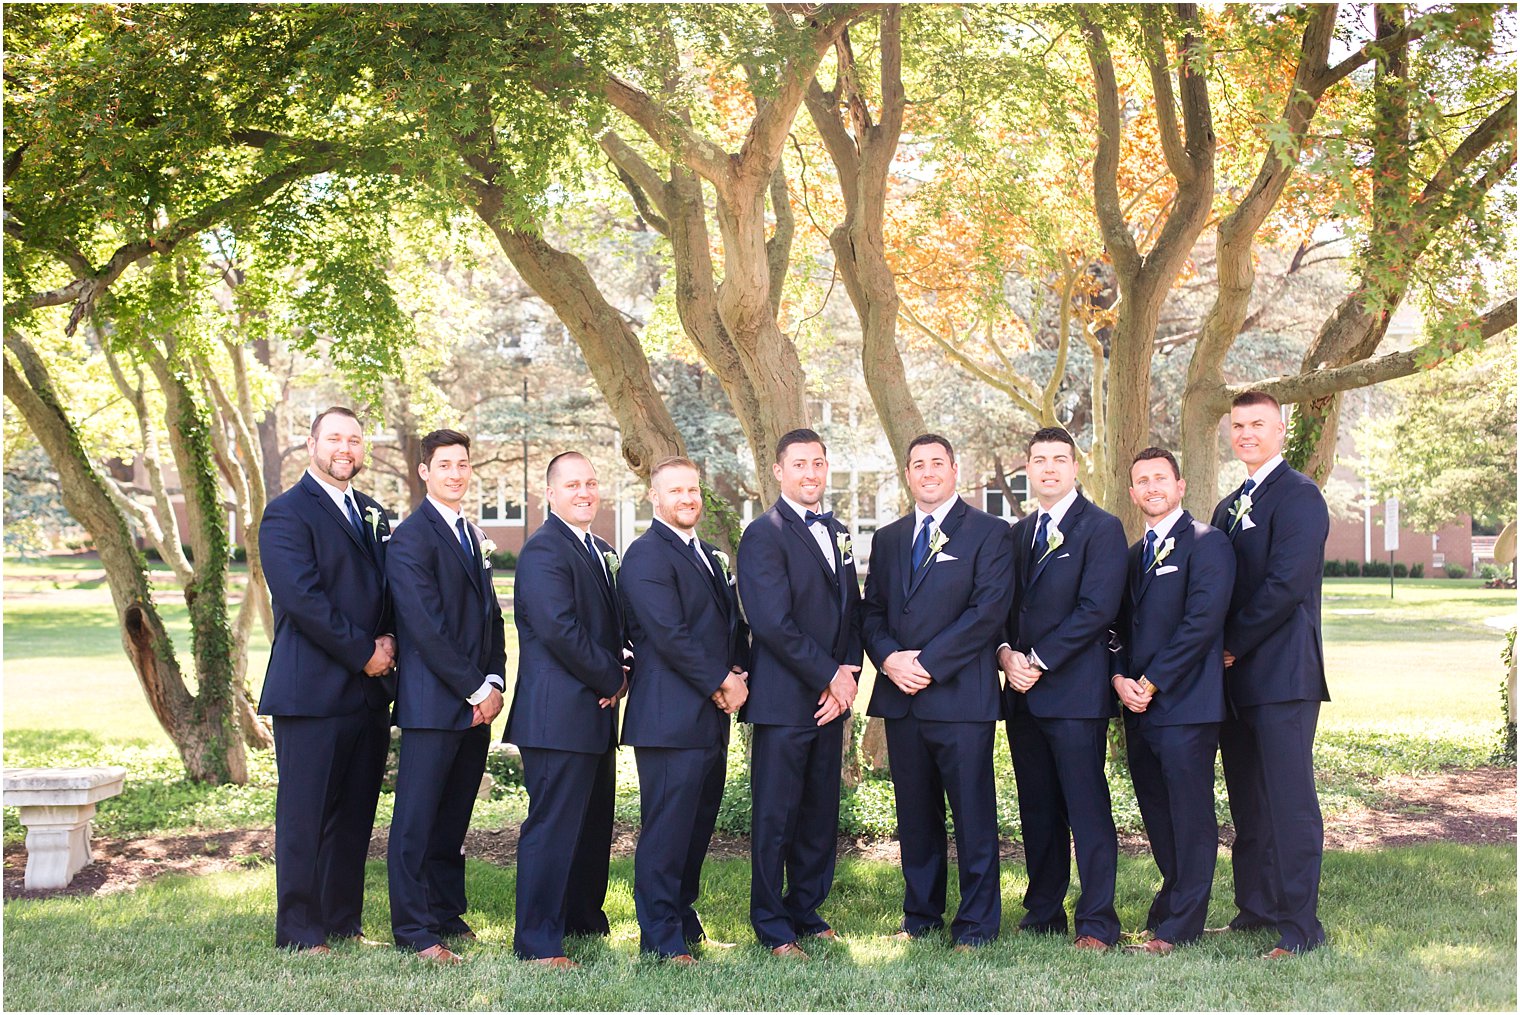 Groomsmen in navy suits by Men's Wearhouse